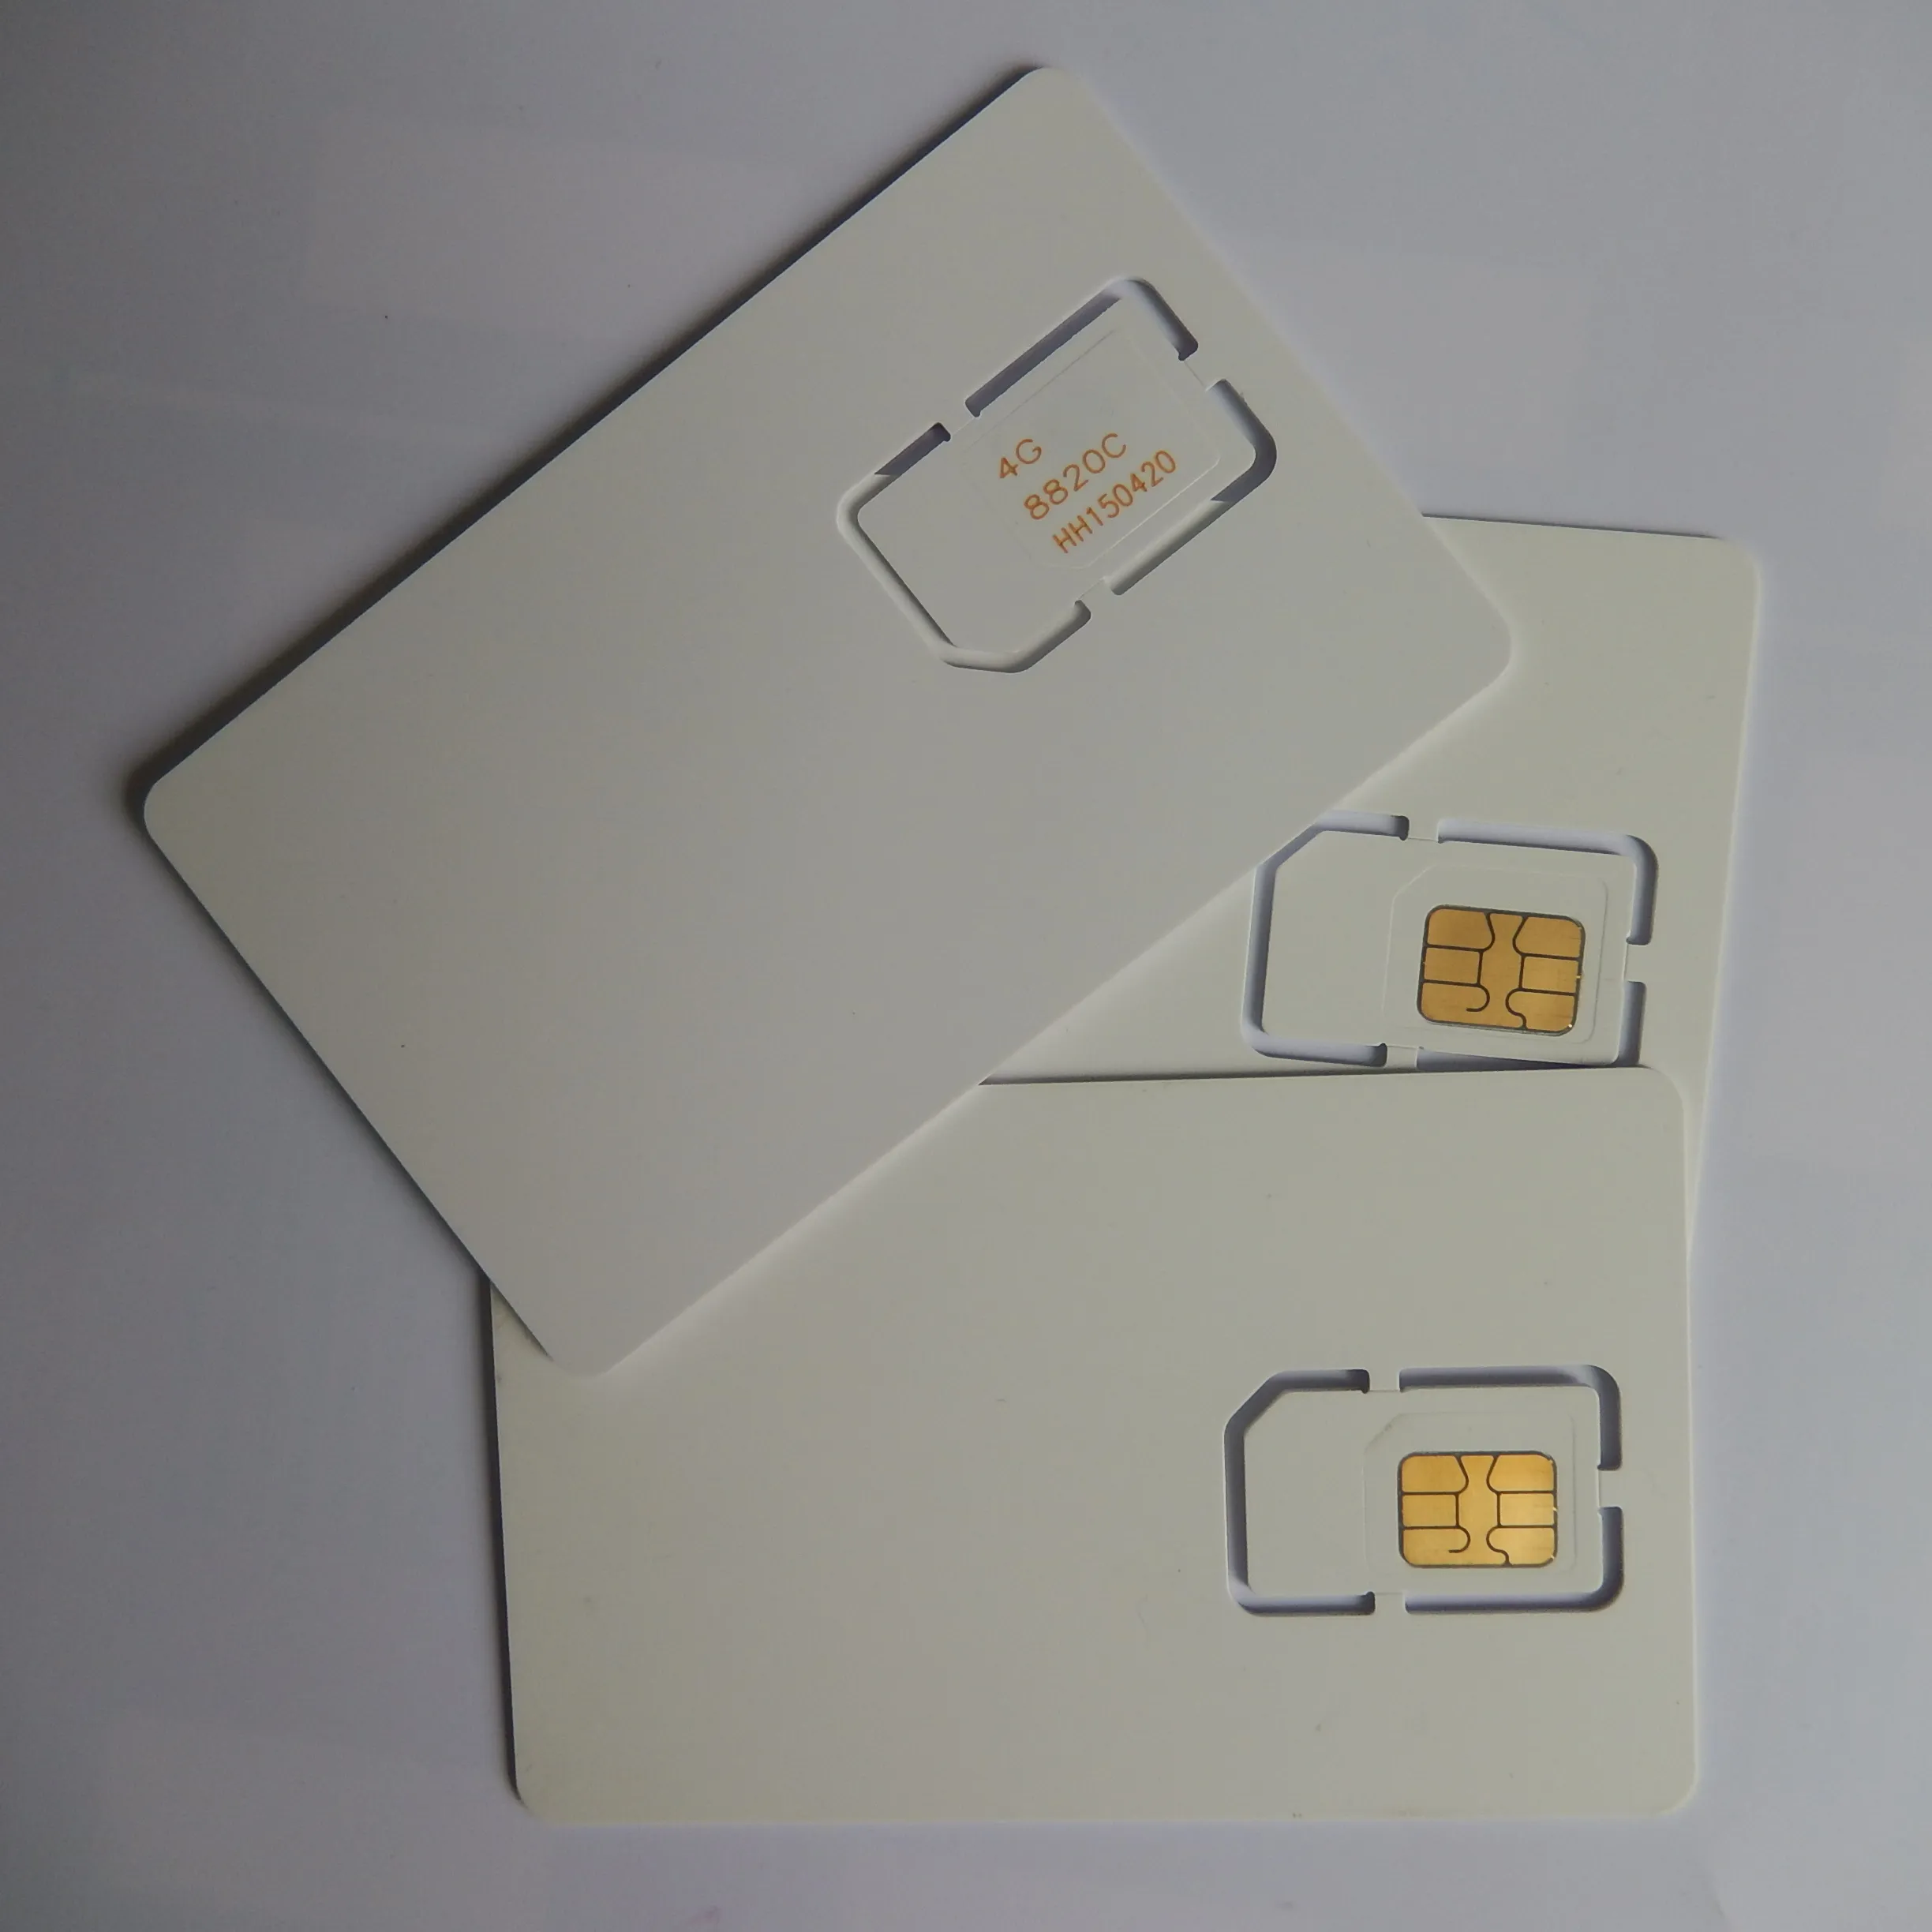 International 4G LTE USIM Milenge SIM Card 2ff 3ff 4ff 3-in-1 128K Prepaid for Smart Watch Mobile Phone Cards